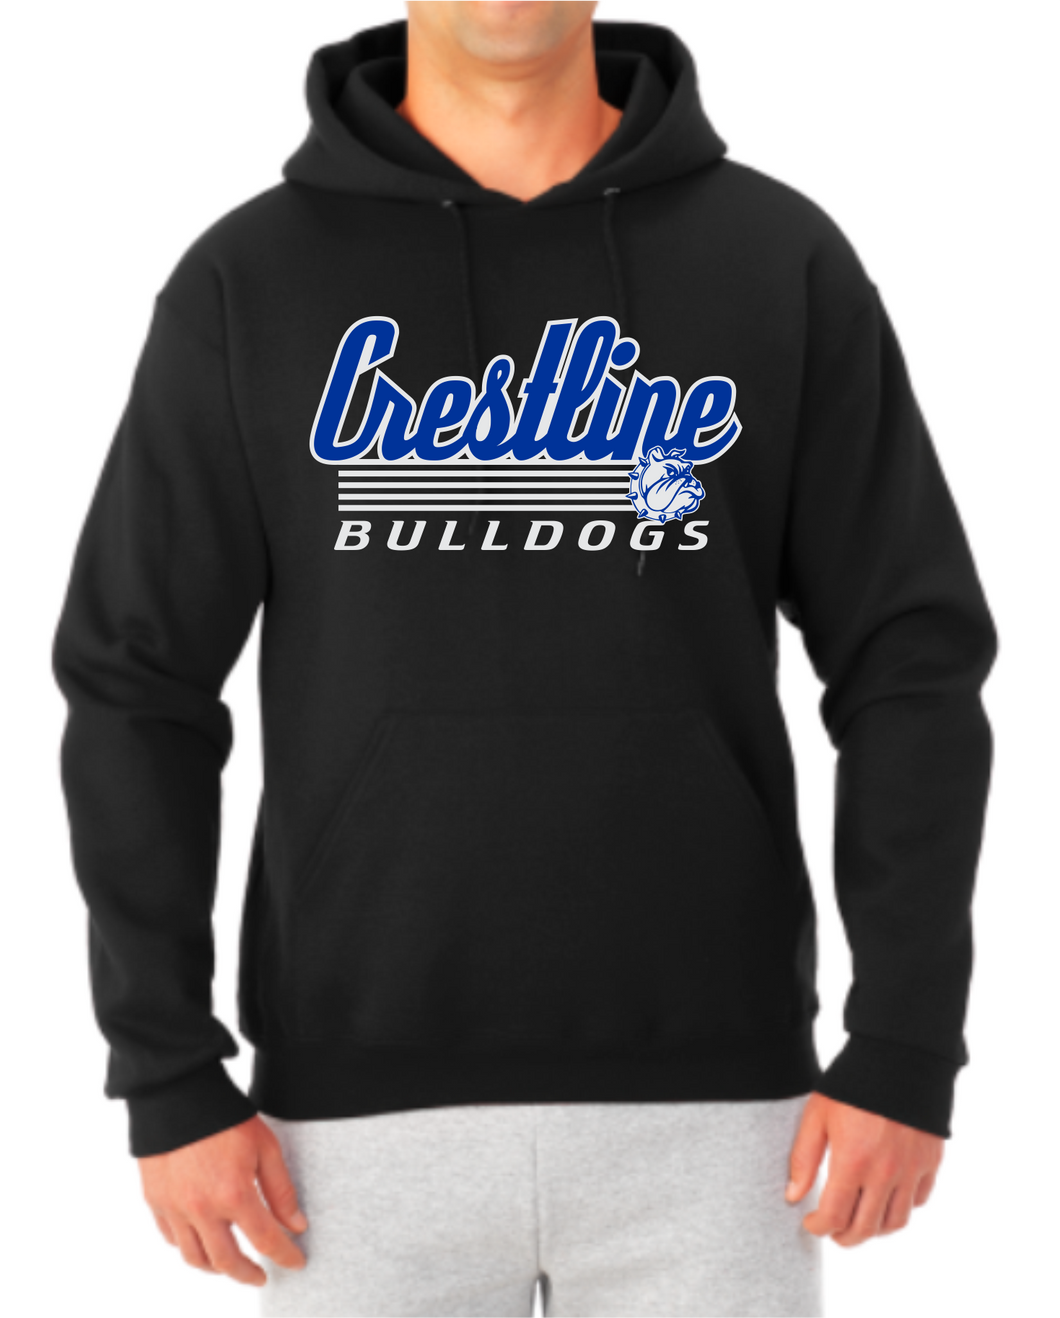 Crestline Bulldogs SD5 Hooded Sweatshirt